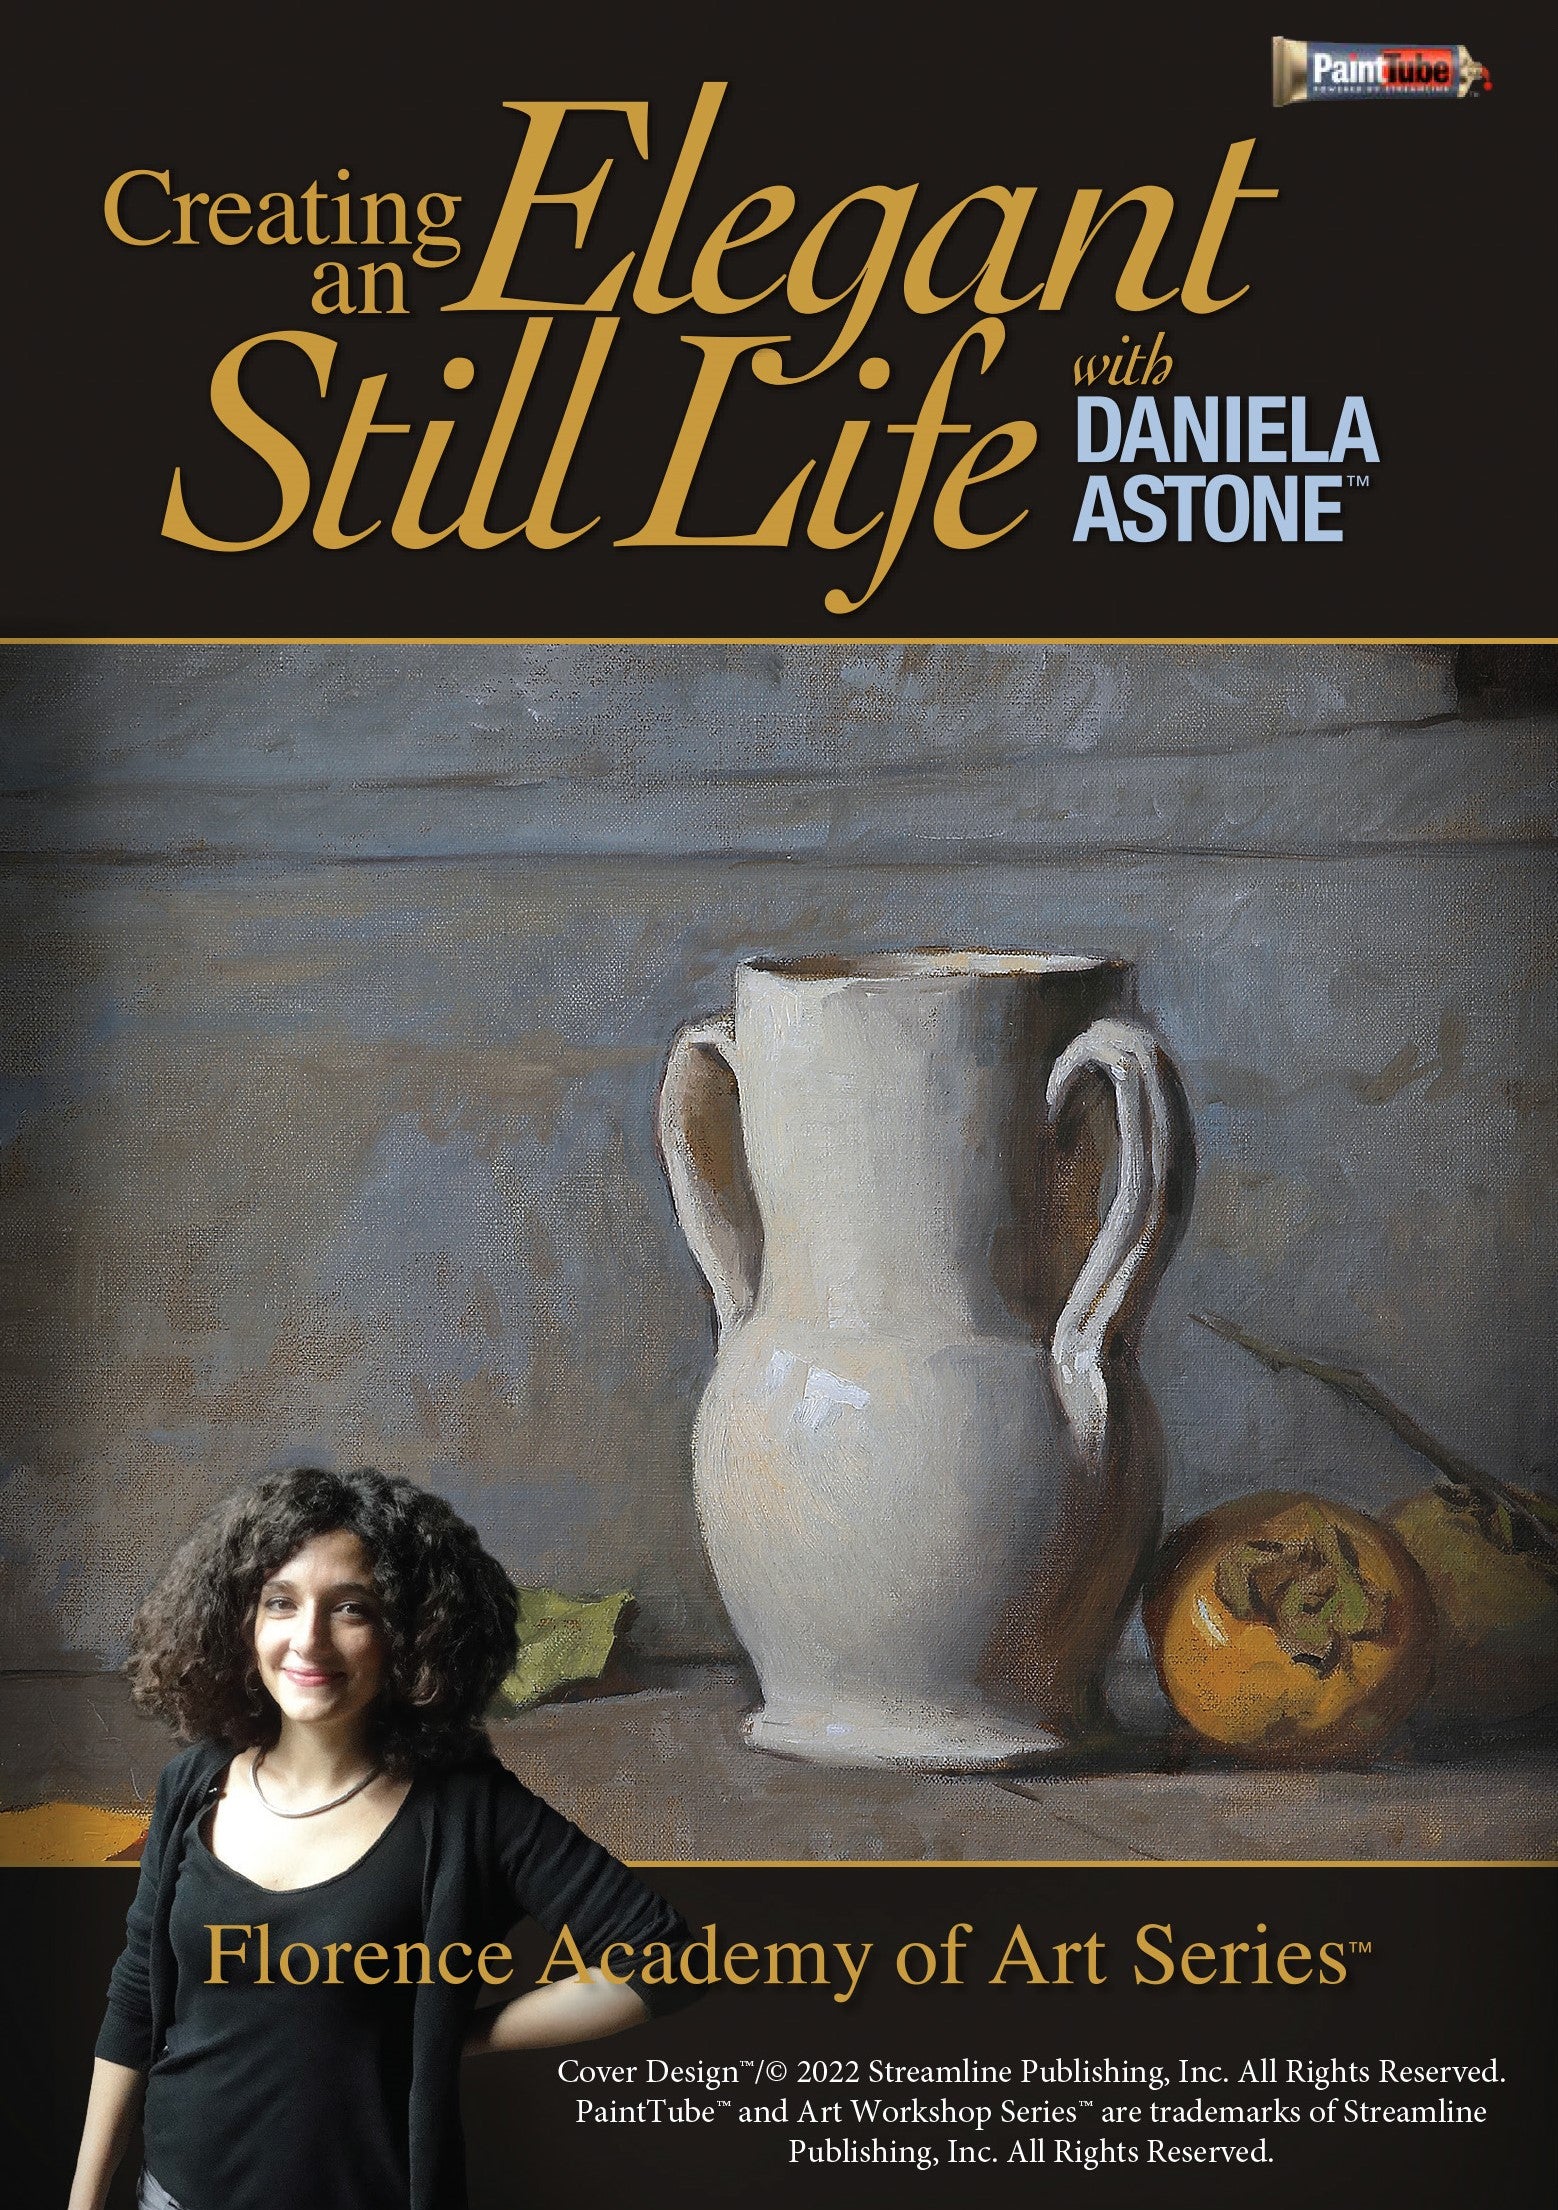 Daniela Astone: Creating an Elegant Still Life